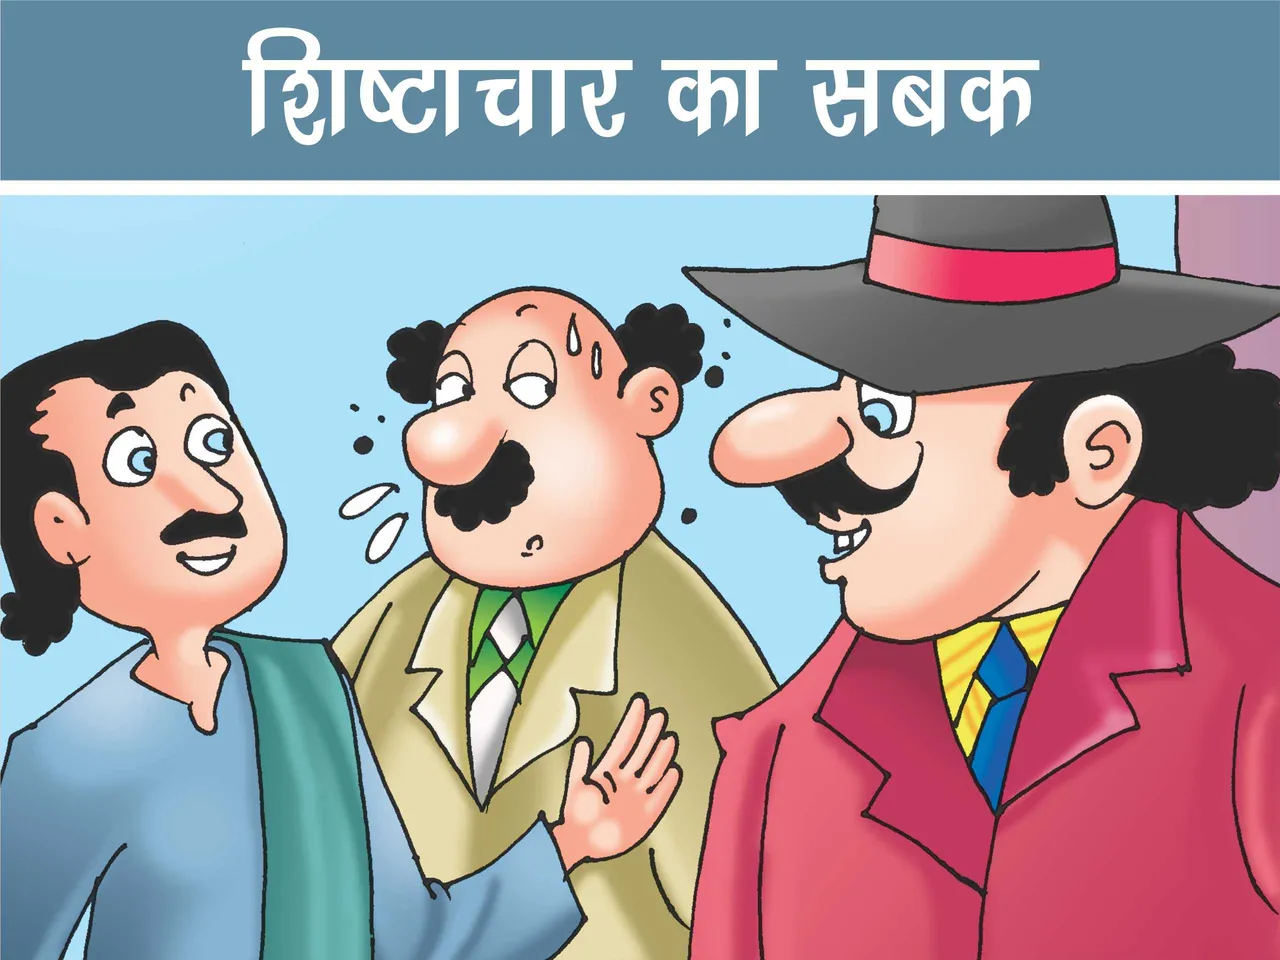 Three Men cartoon image